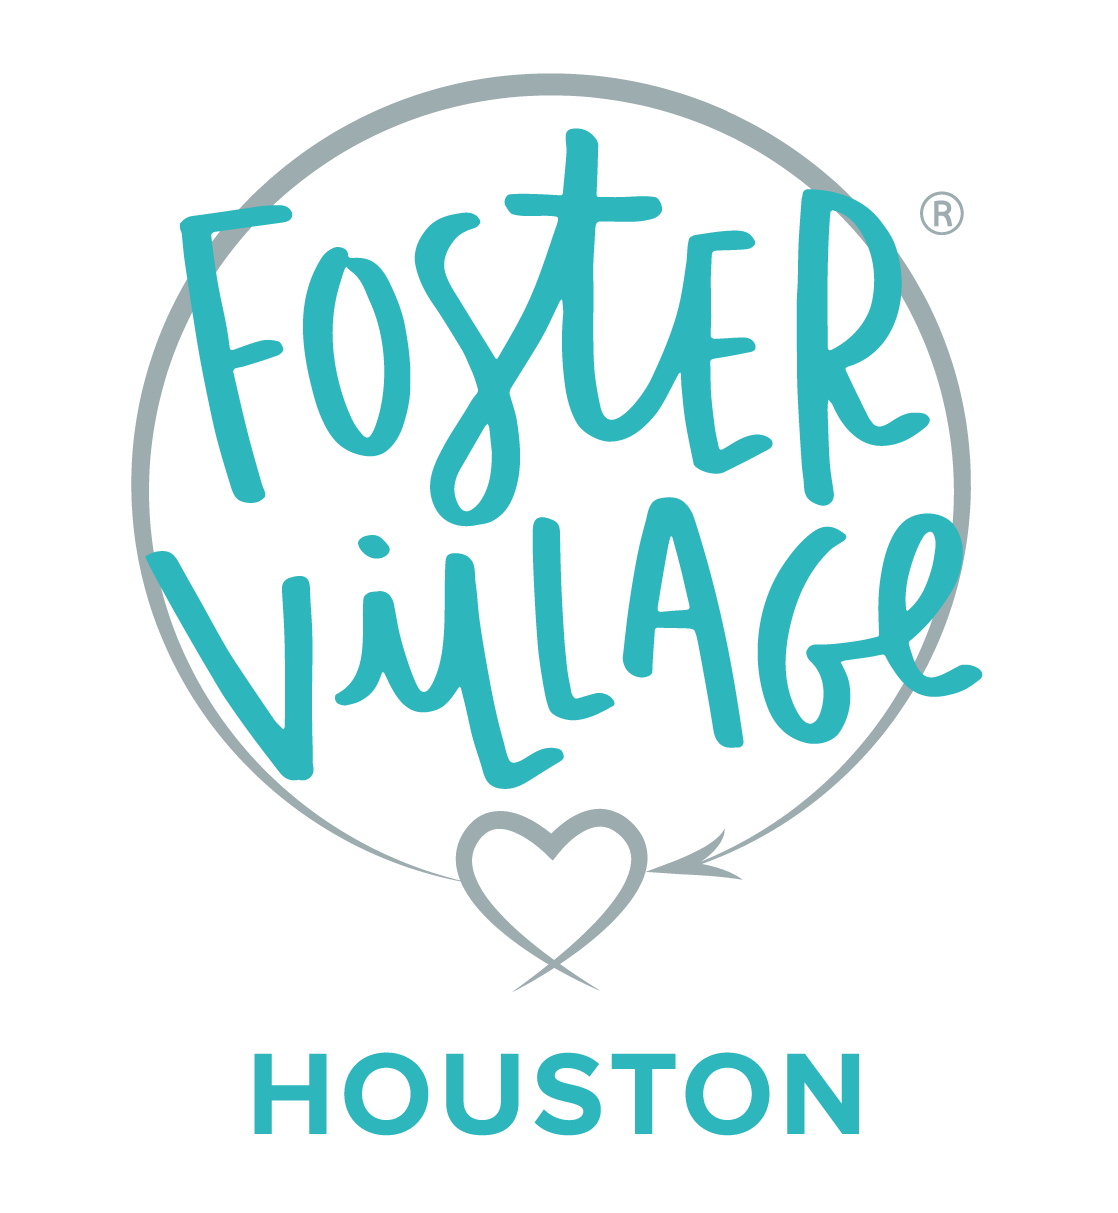 Foster Village Houston